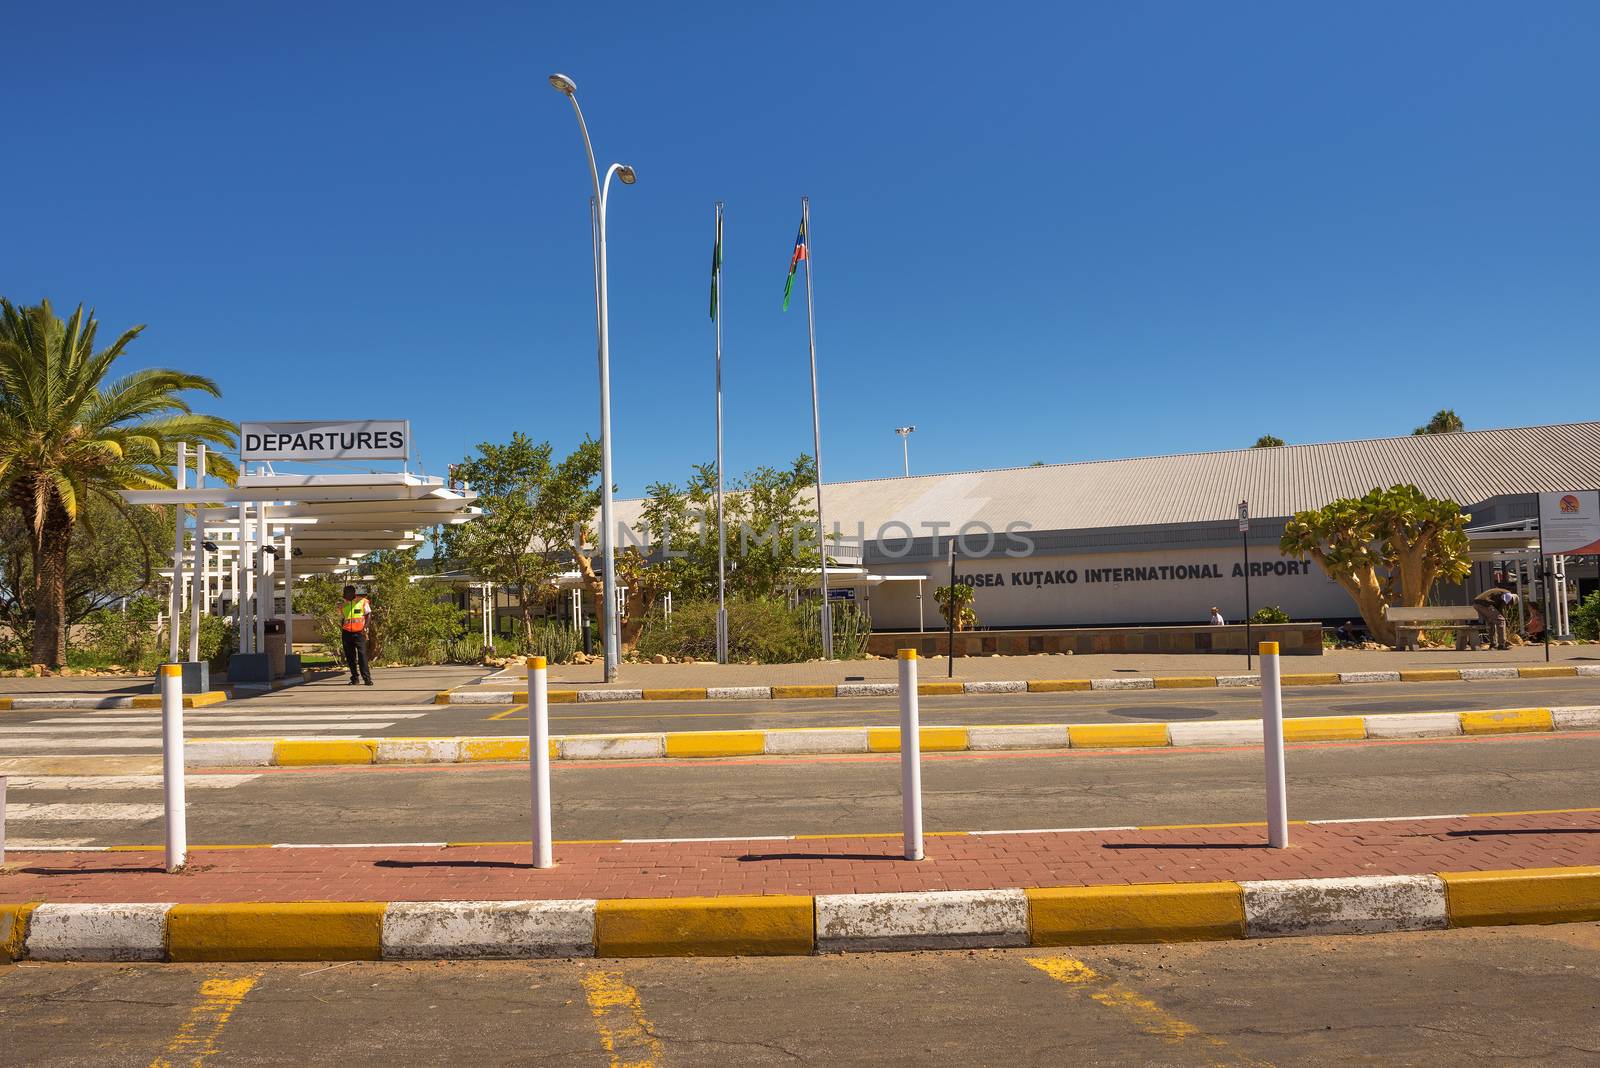 Hosea Kutako International Airport in Windhoek, the capital city of Namibia by nickfox